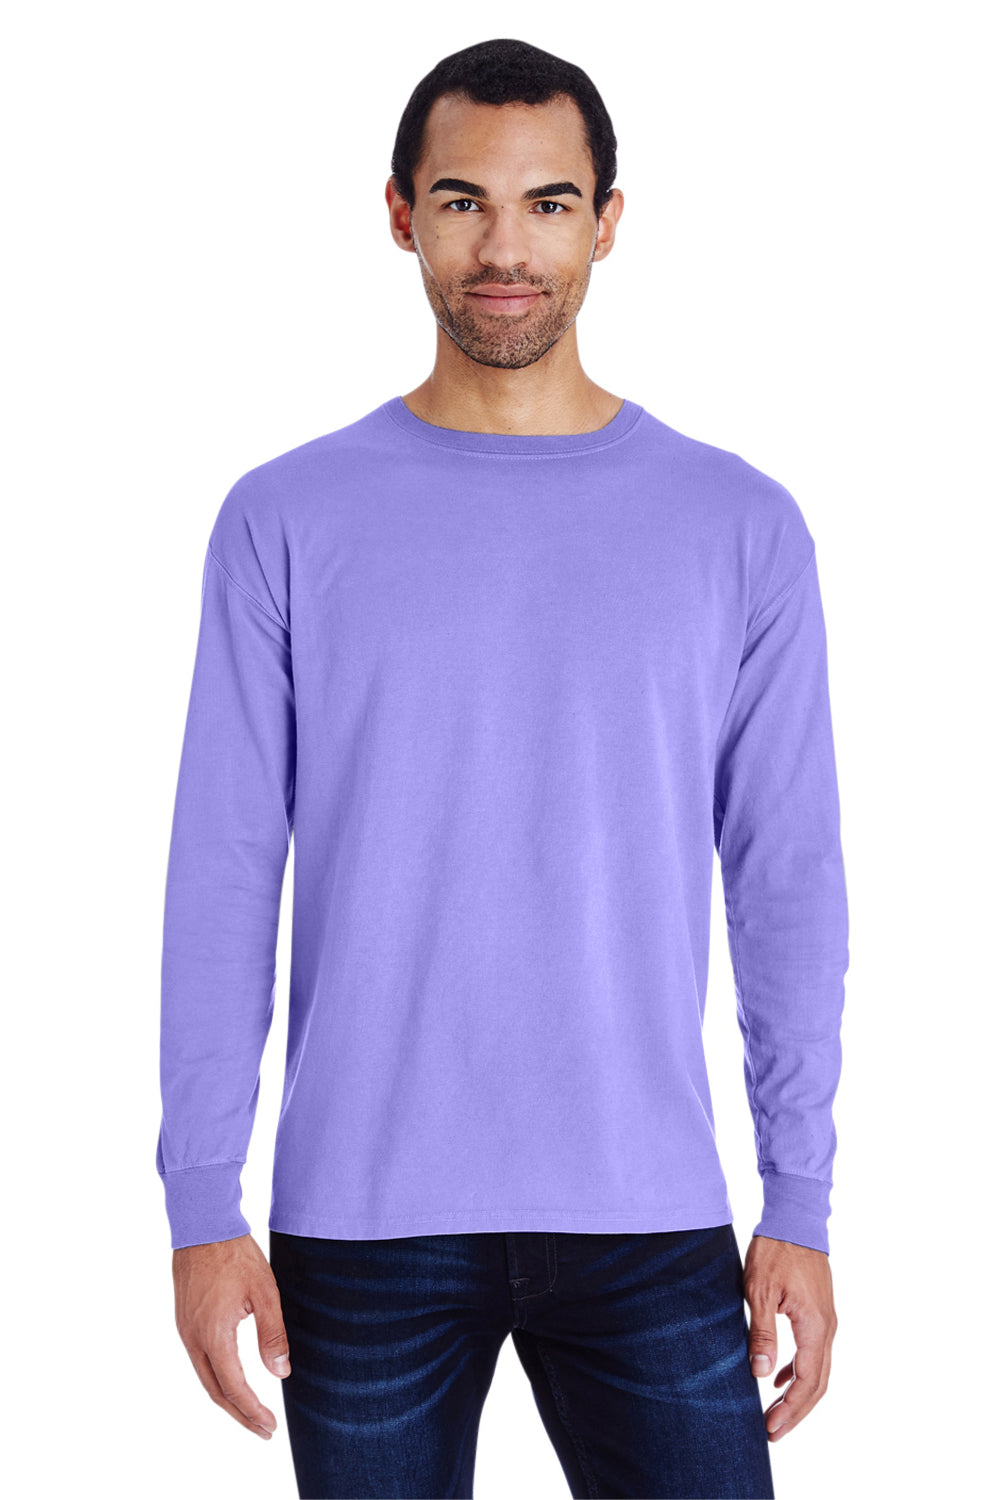 ComfortWash by Hanes GDH200 Long Sleeve Crewneck T-Shirt Lavender Purple Front